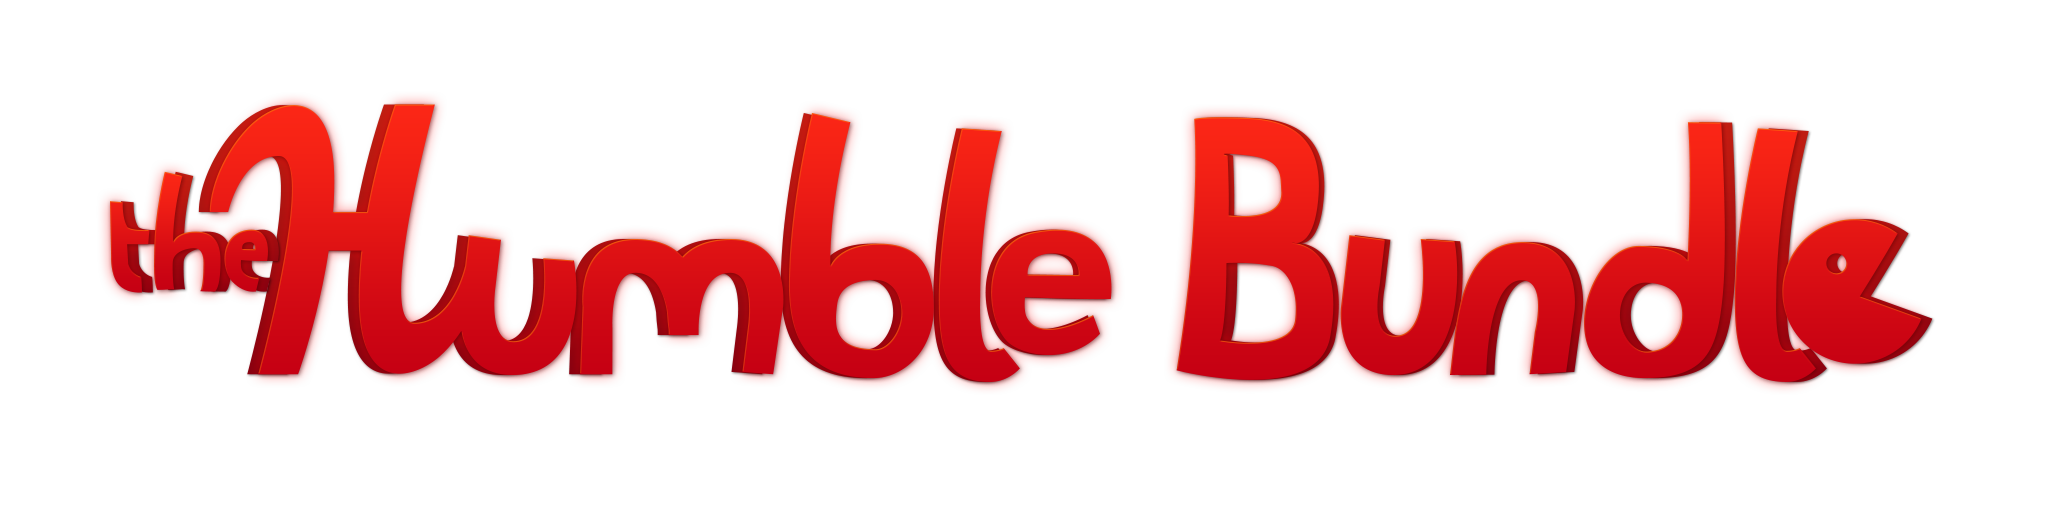 humble-bundle-logo-horizontal1.png